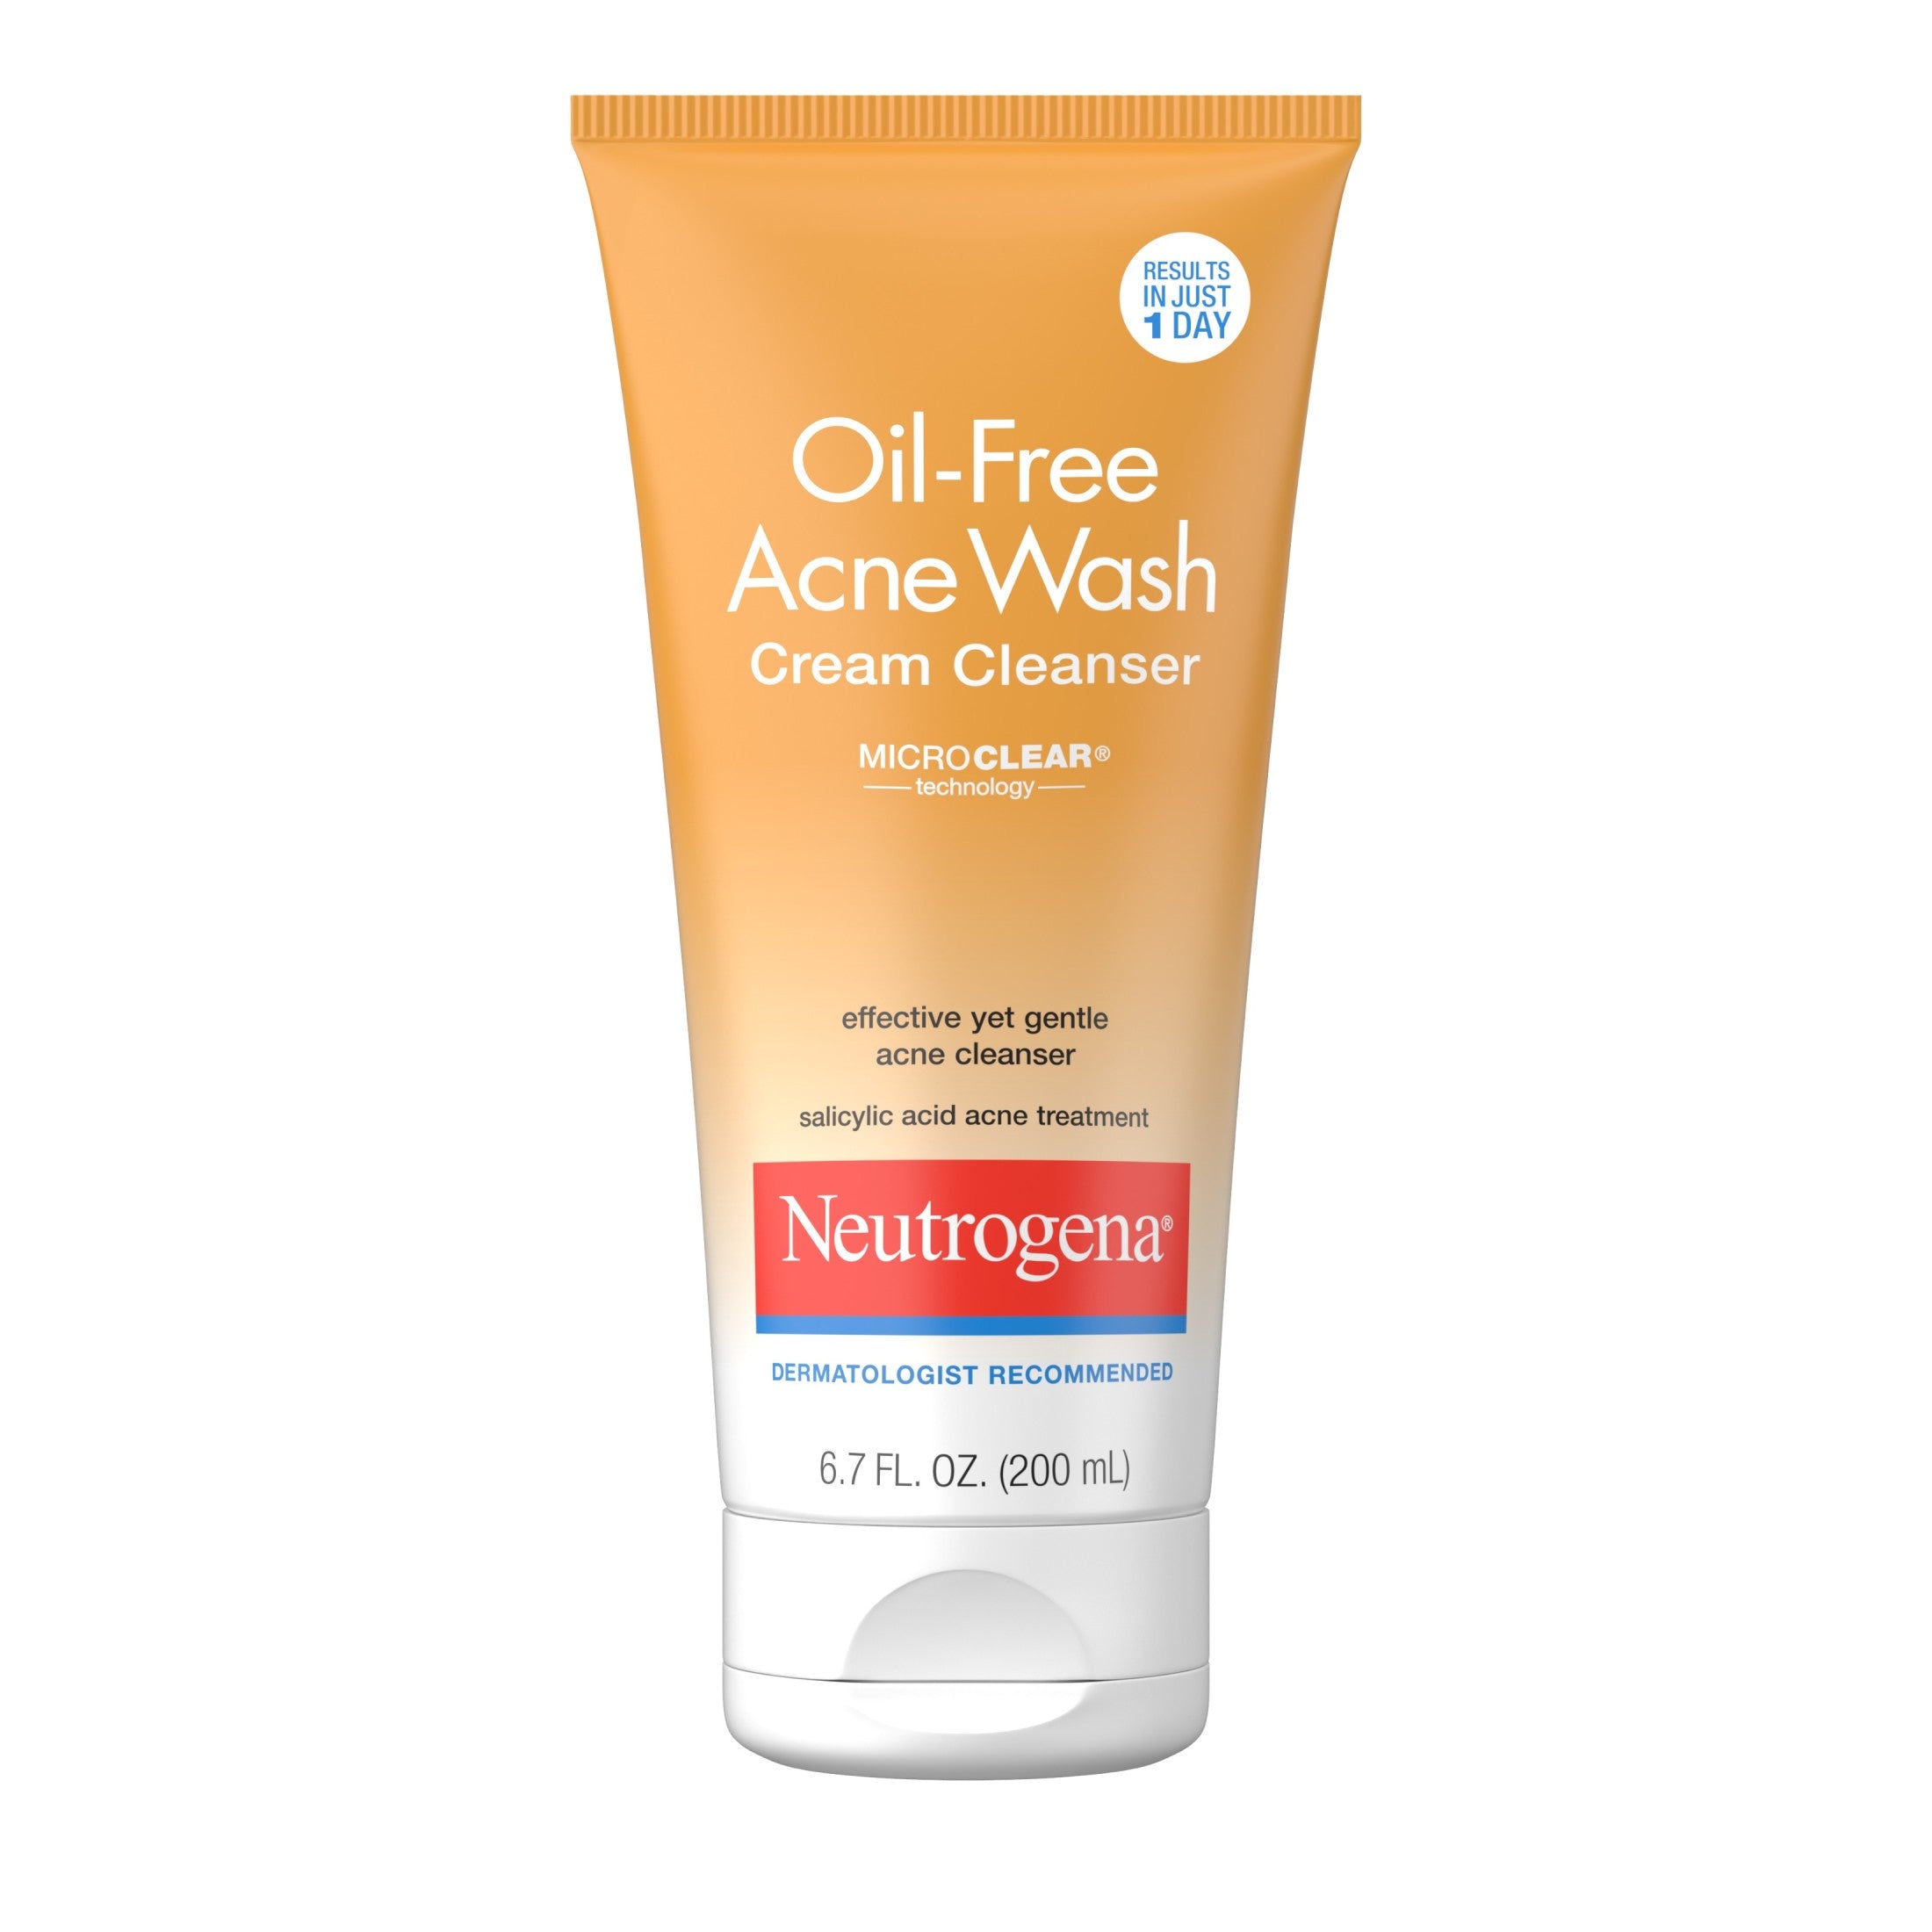 Neutrogena Oil-Free Acne Face Wash Cream, Face Cleanser, 6.7 fl. oz | MTTS276